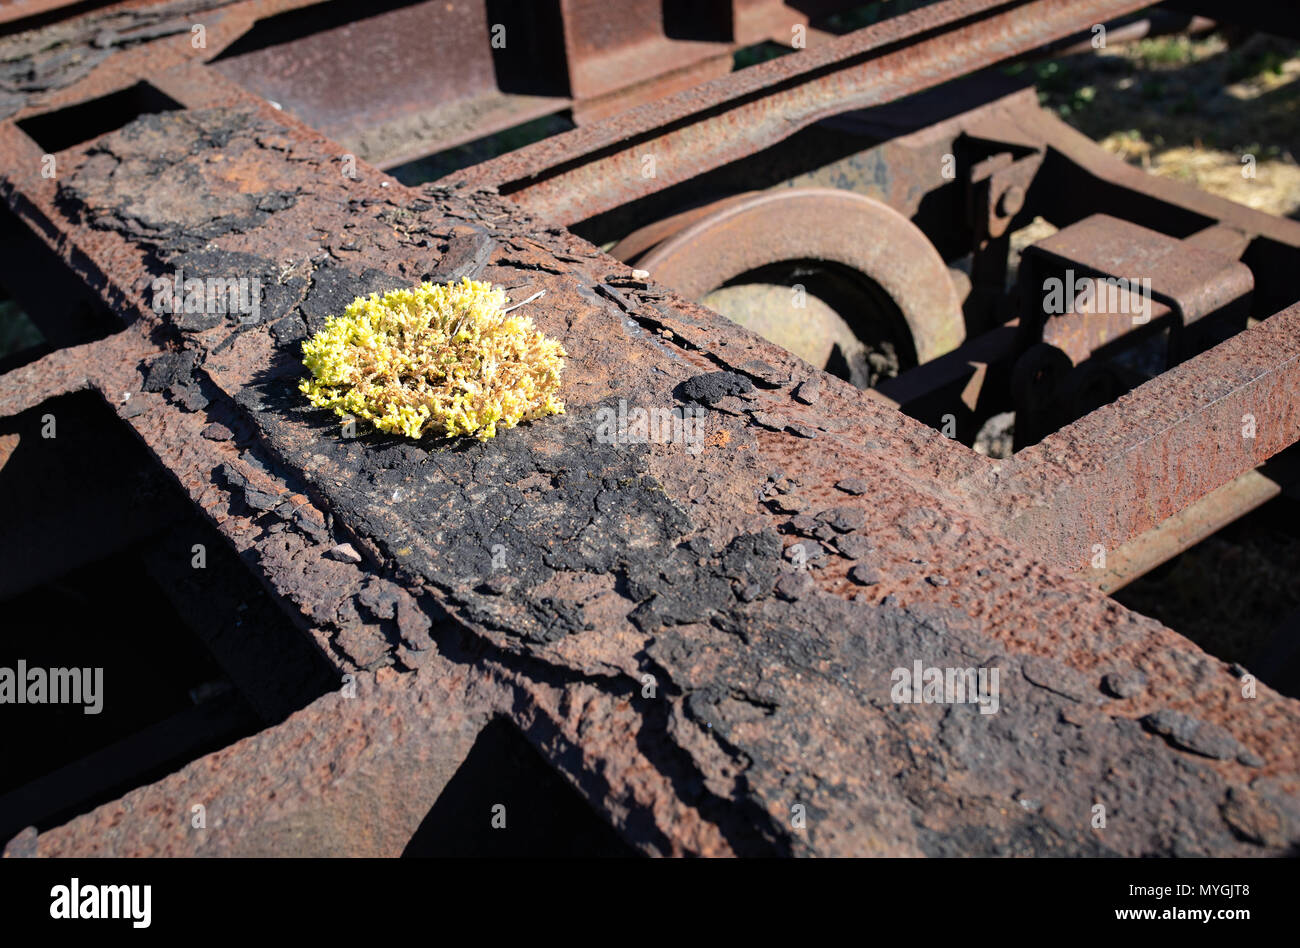 Plant, lichen growing on old rusty iron. Railway scrap metal. Stock Photo